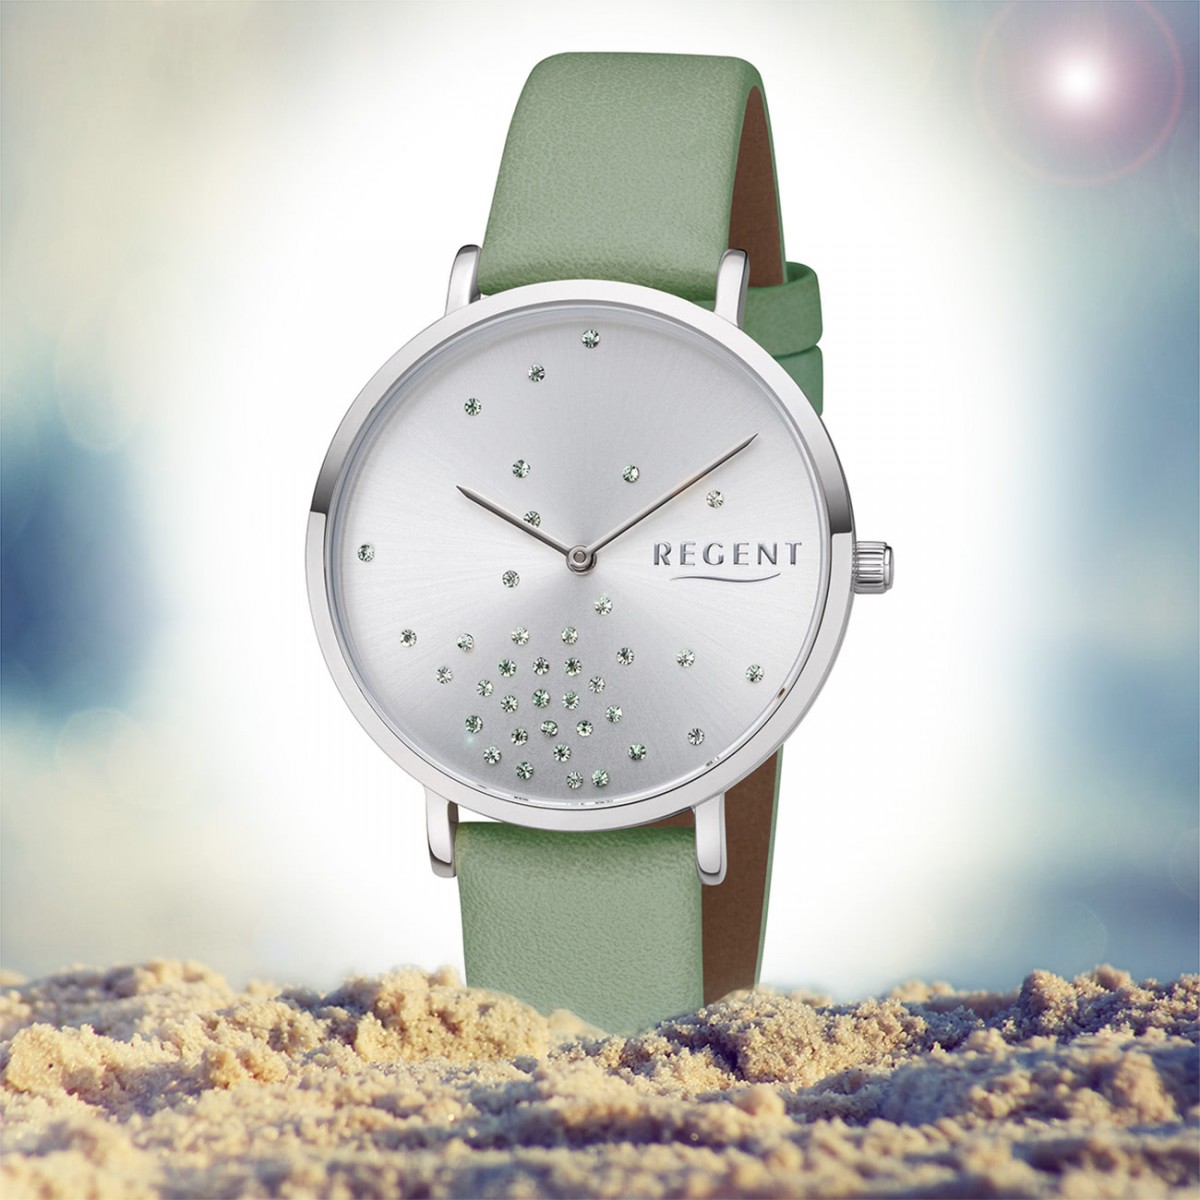 Regent Damen Armbanduhr grün URBA598 BA-598 Analog Quarz-Uhr Leder